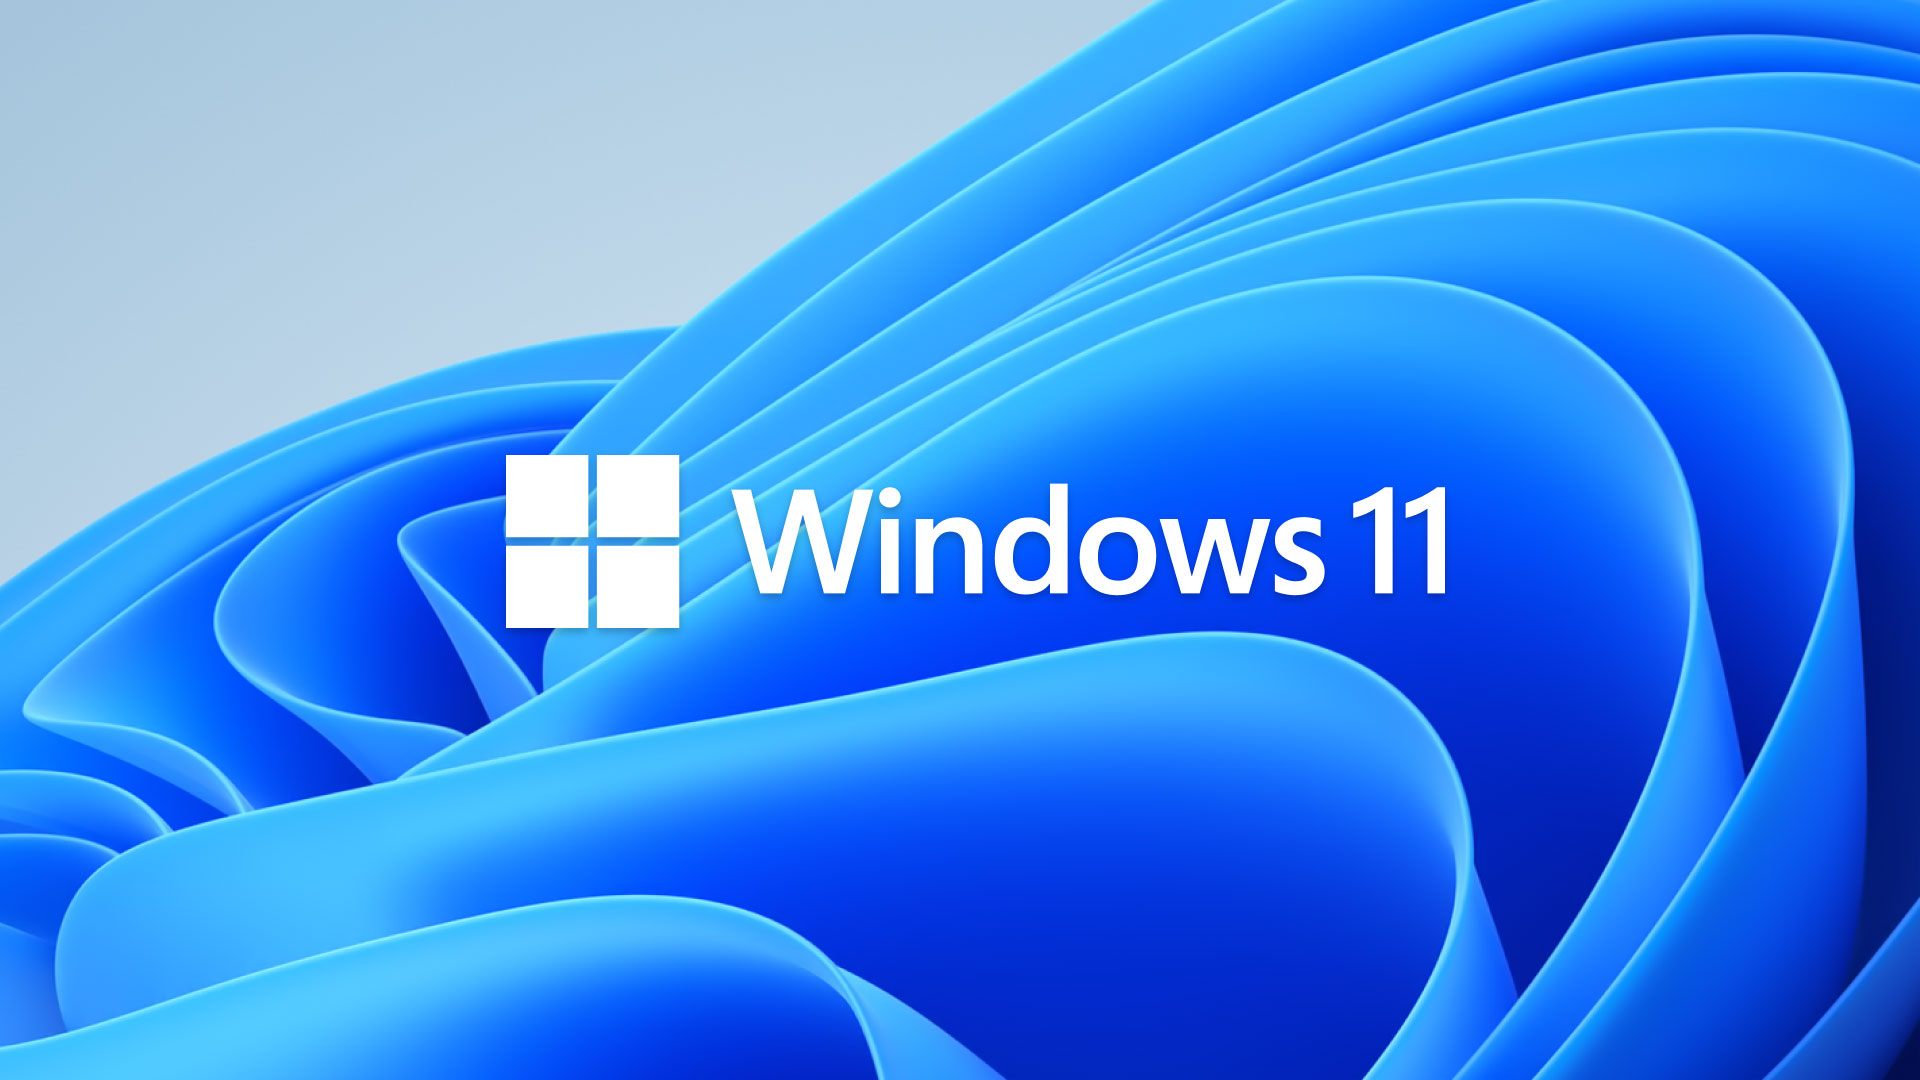 Her er nye Windows 11